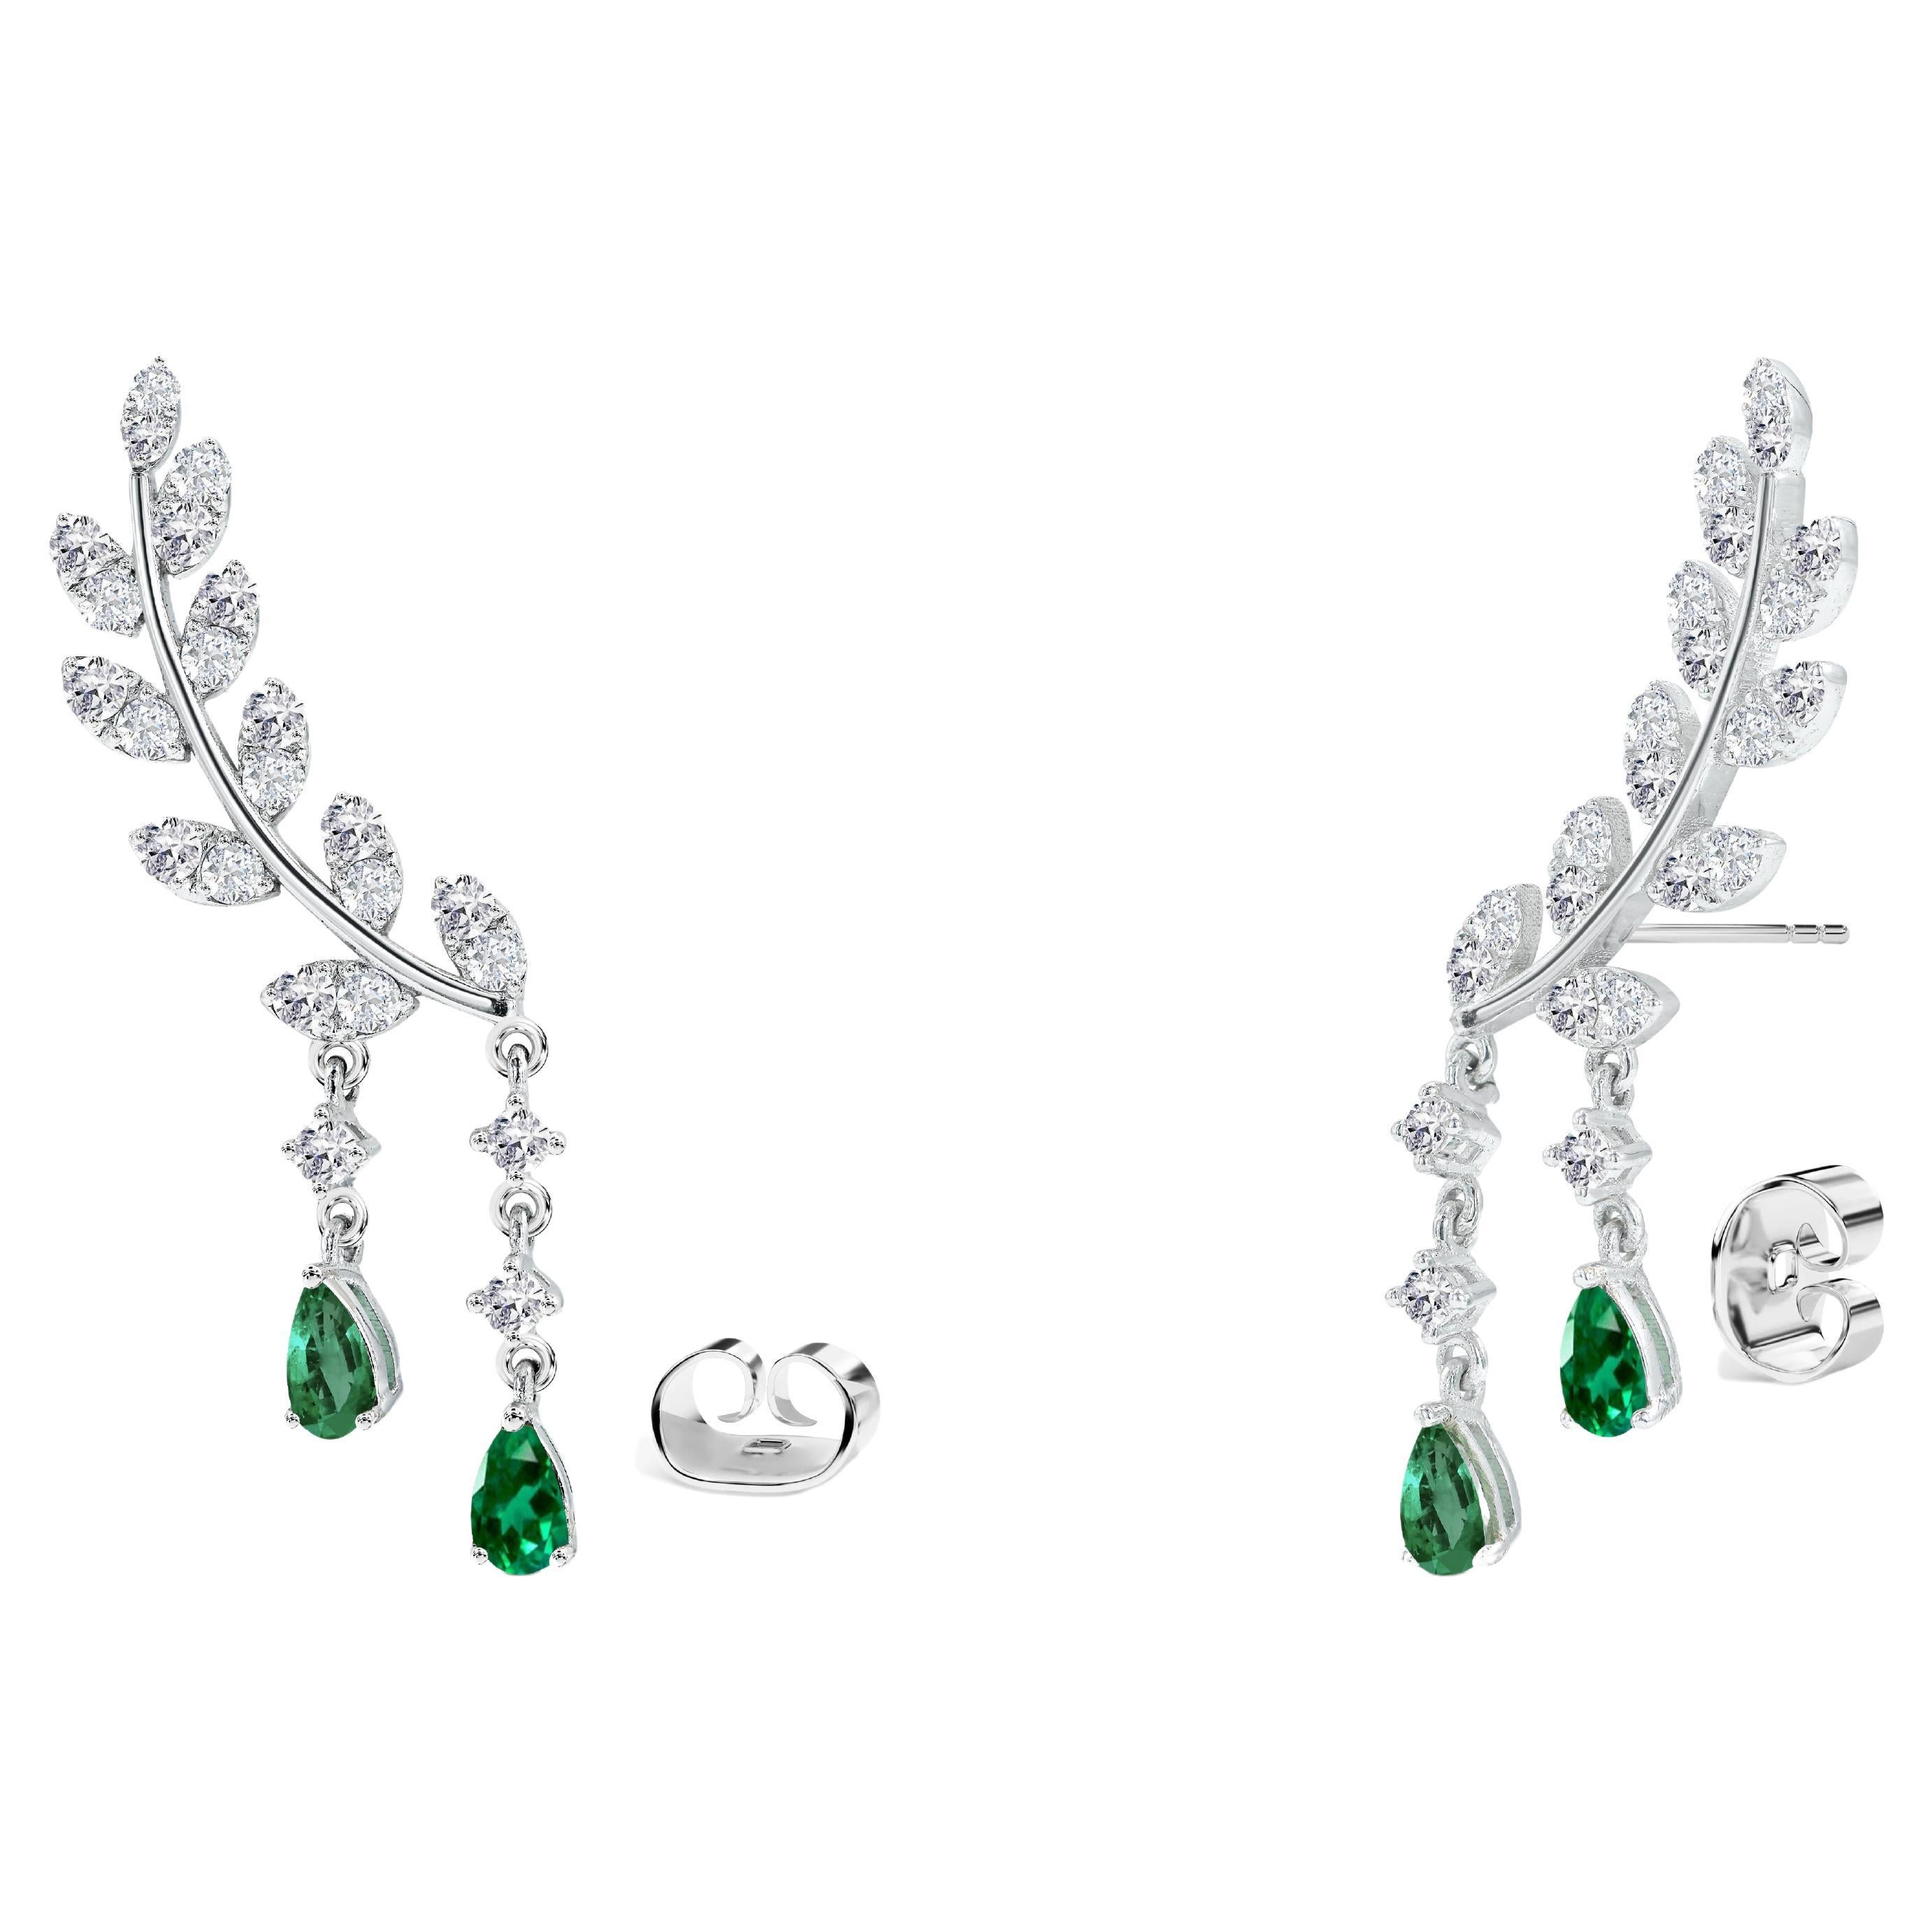 2.25ct Diamond And Emerald Leaf Drop Earrings In 18k Gold Round Cut Diamond